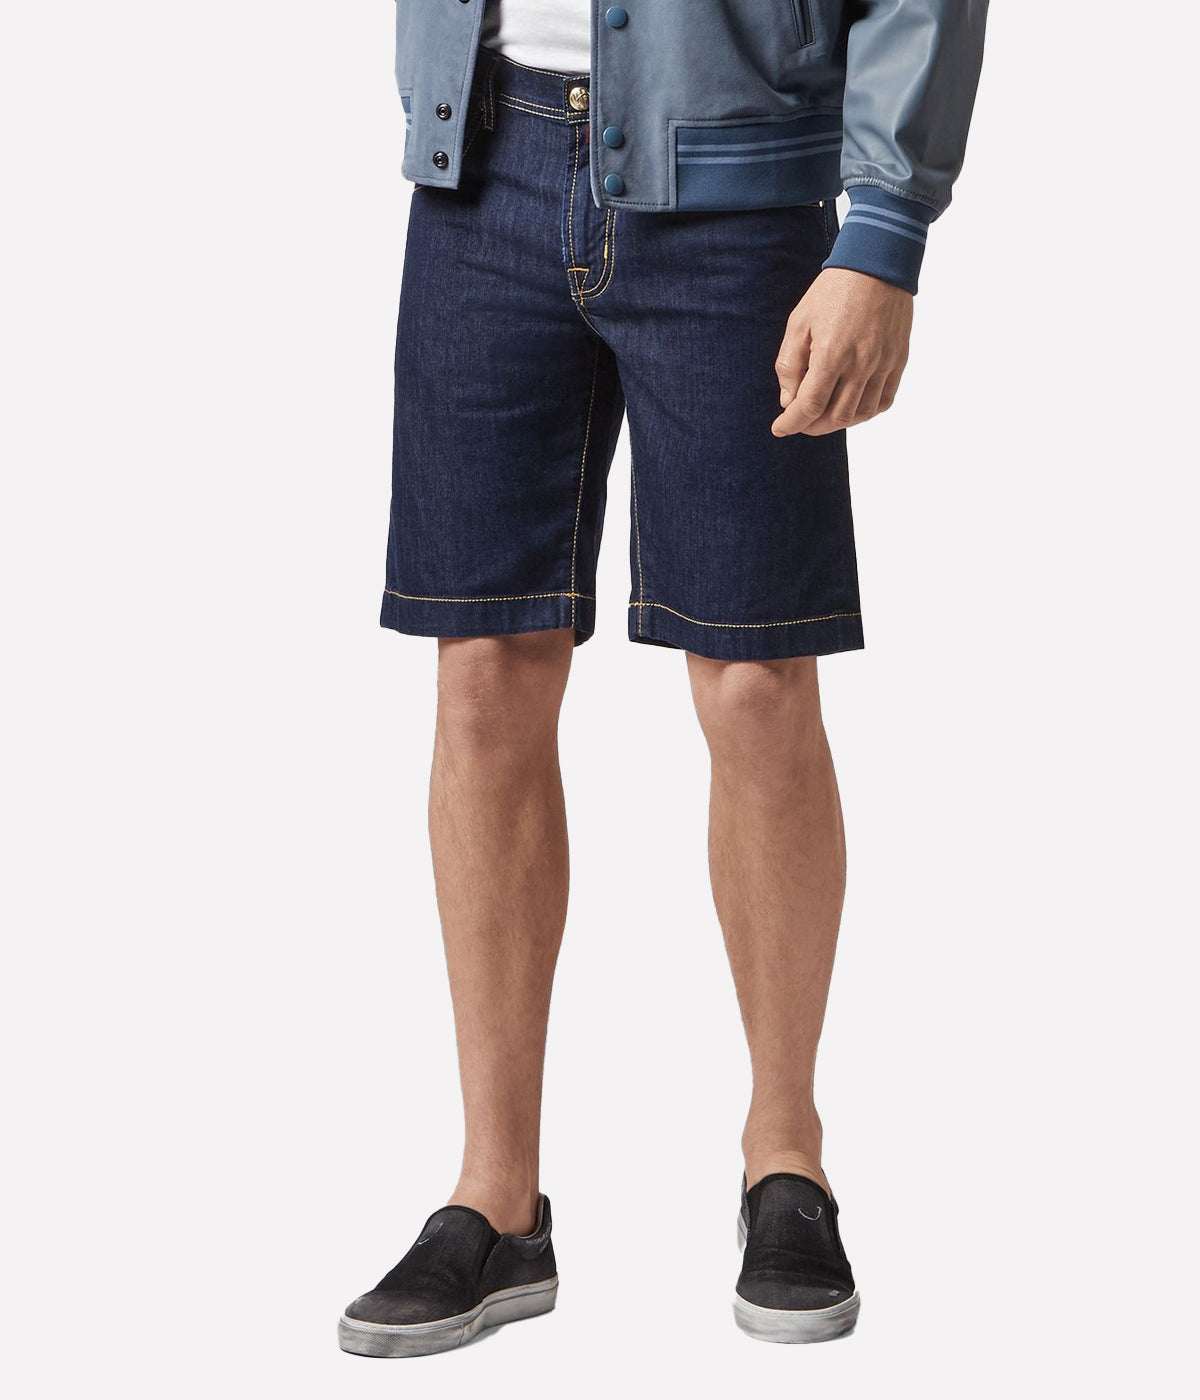 Bermuda 5 Pocket Slim Fit Shorts in Blue